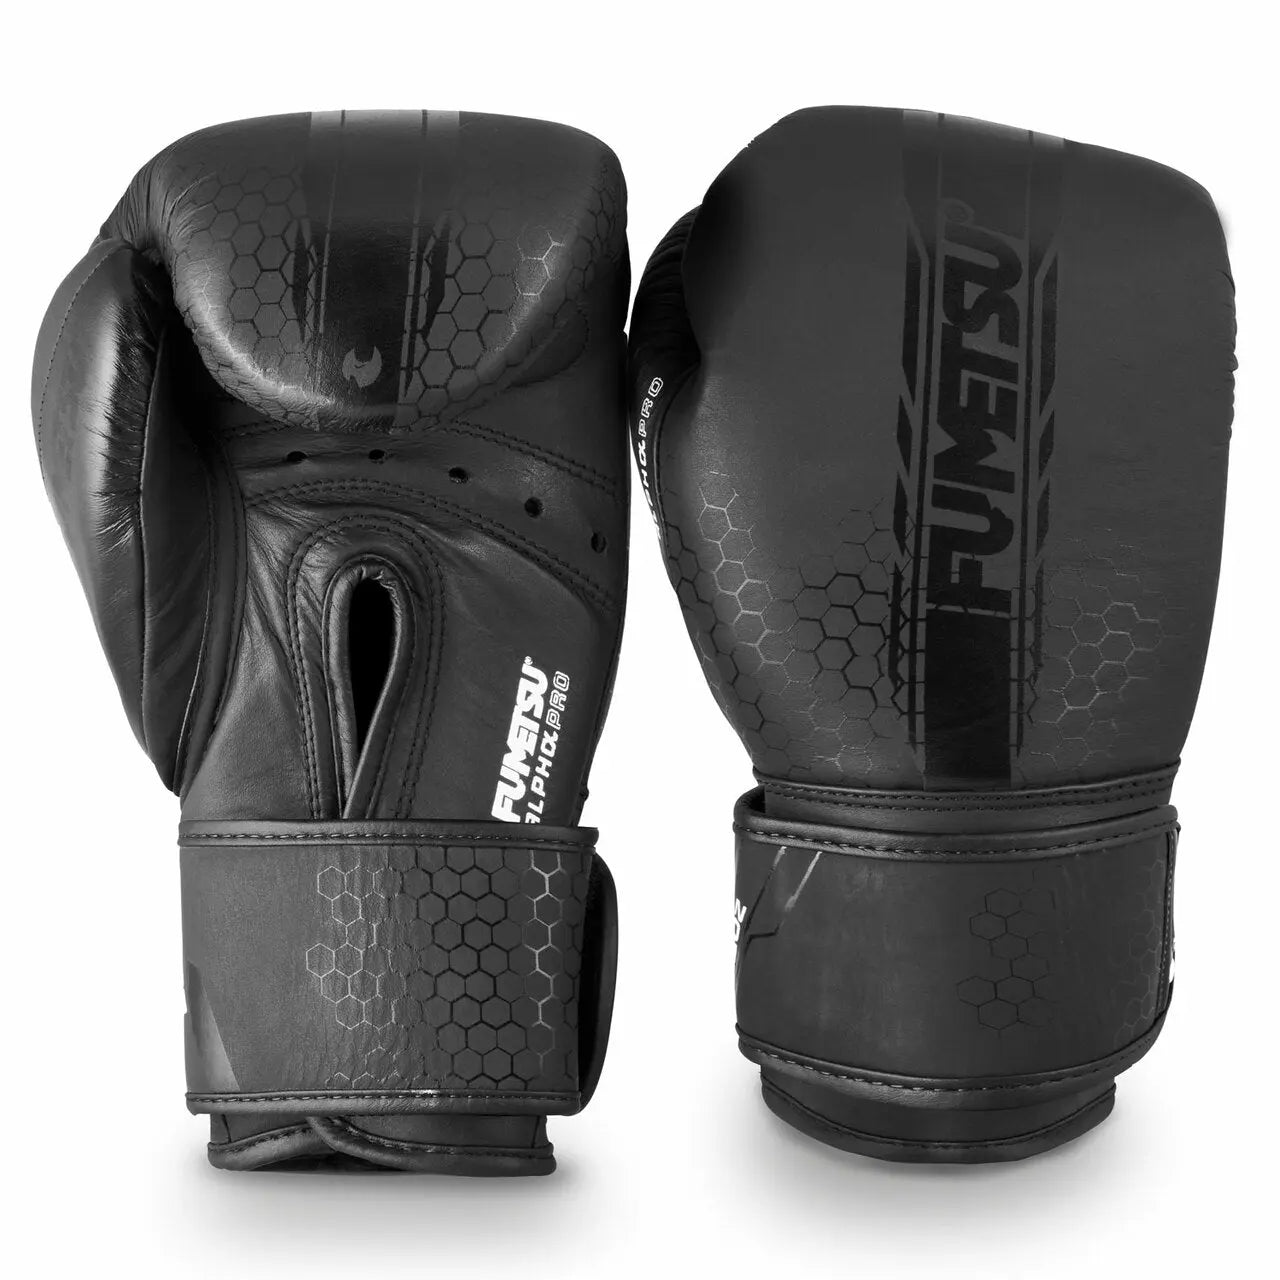 Fumetsu Alpha Pro Boxing Gloves Fumetsu